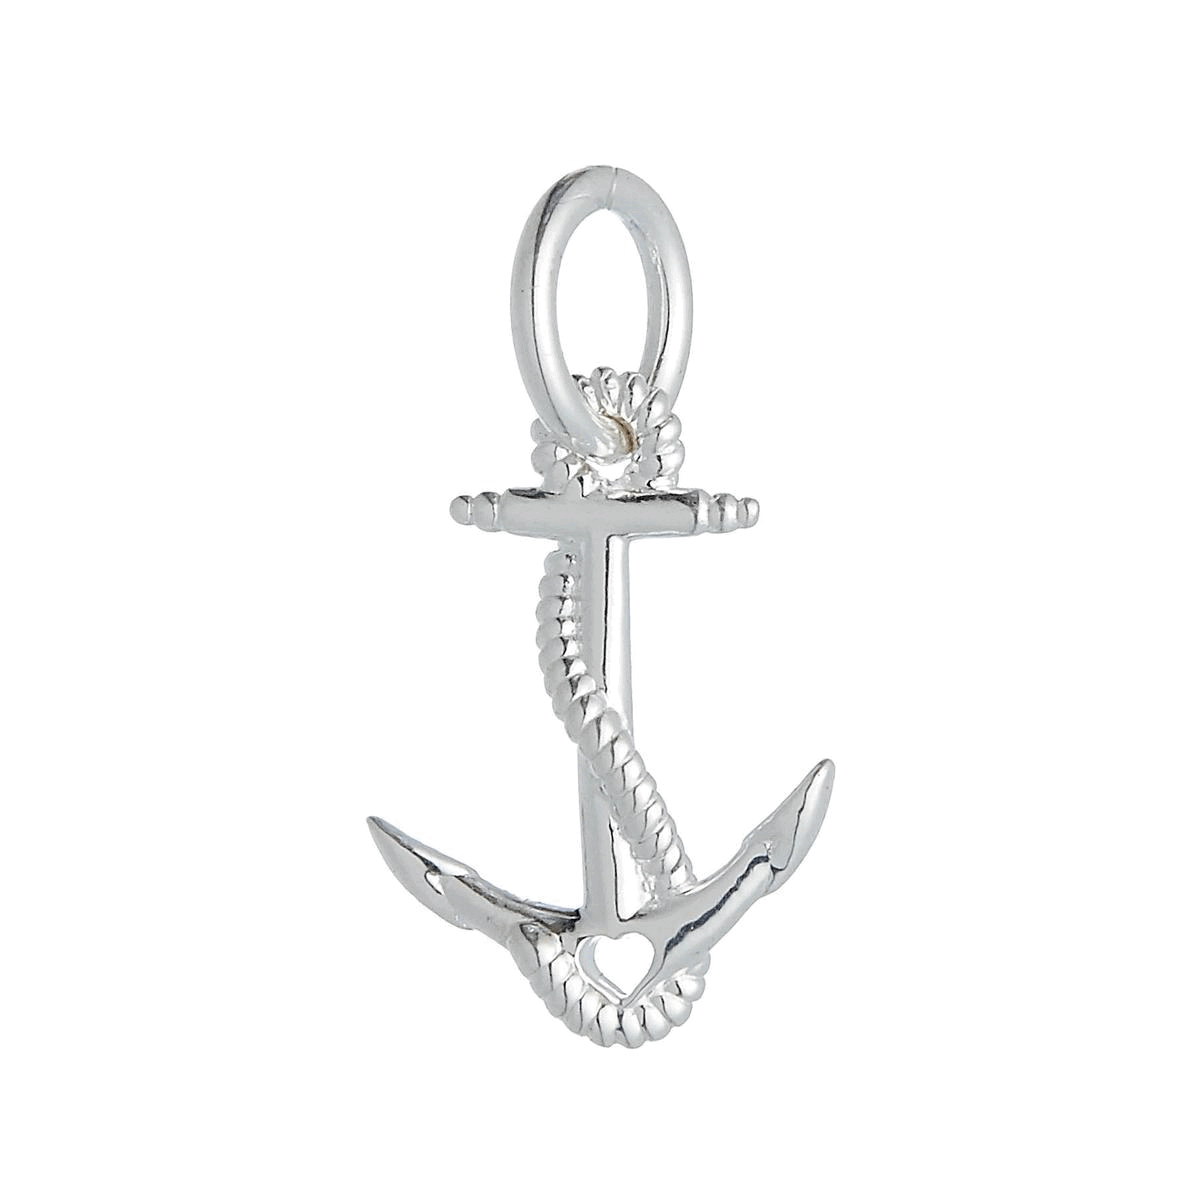 Small silver anchor charm